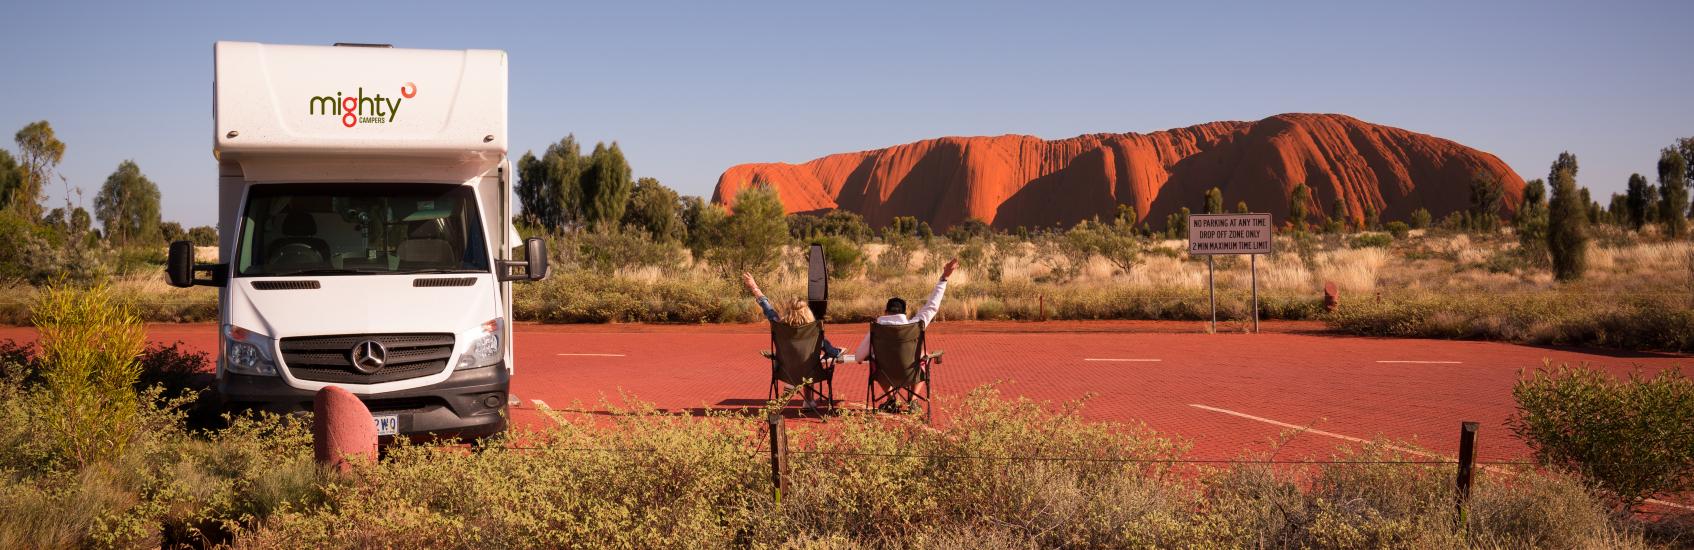 Mighty Camper parkend am Uluru in Australien